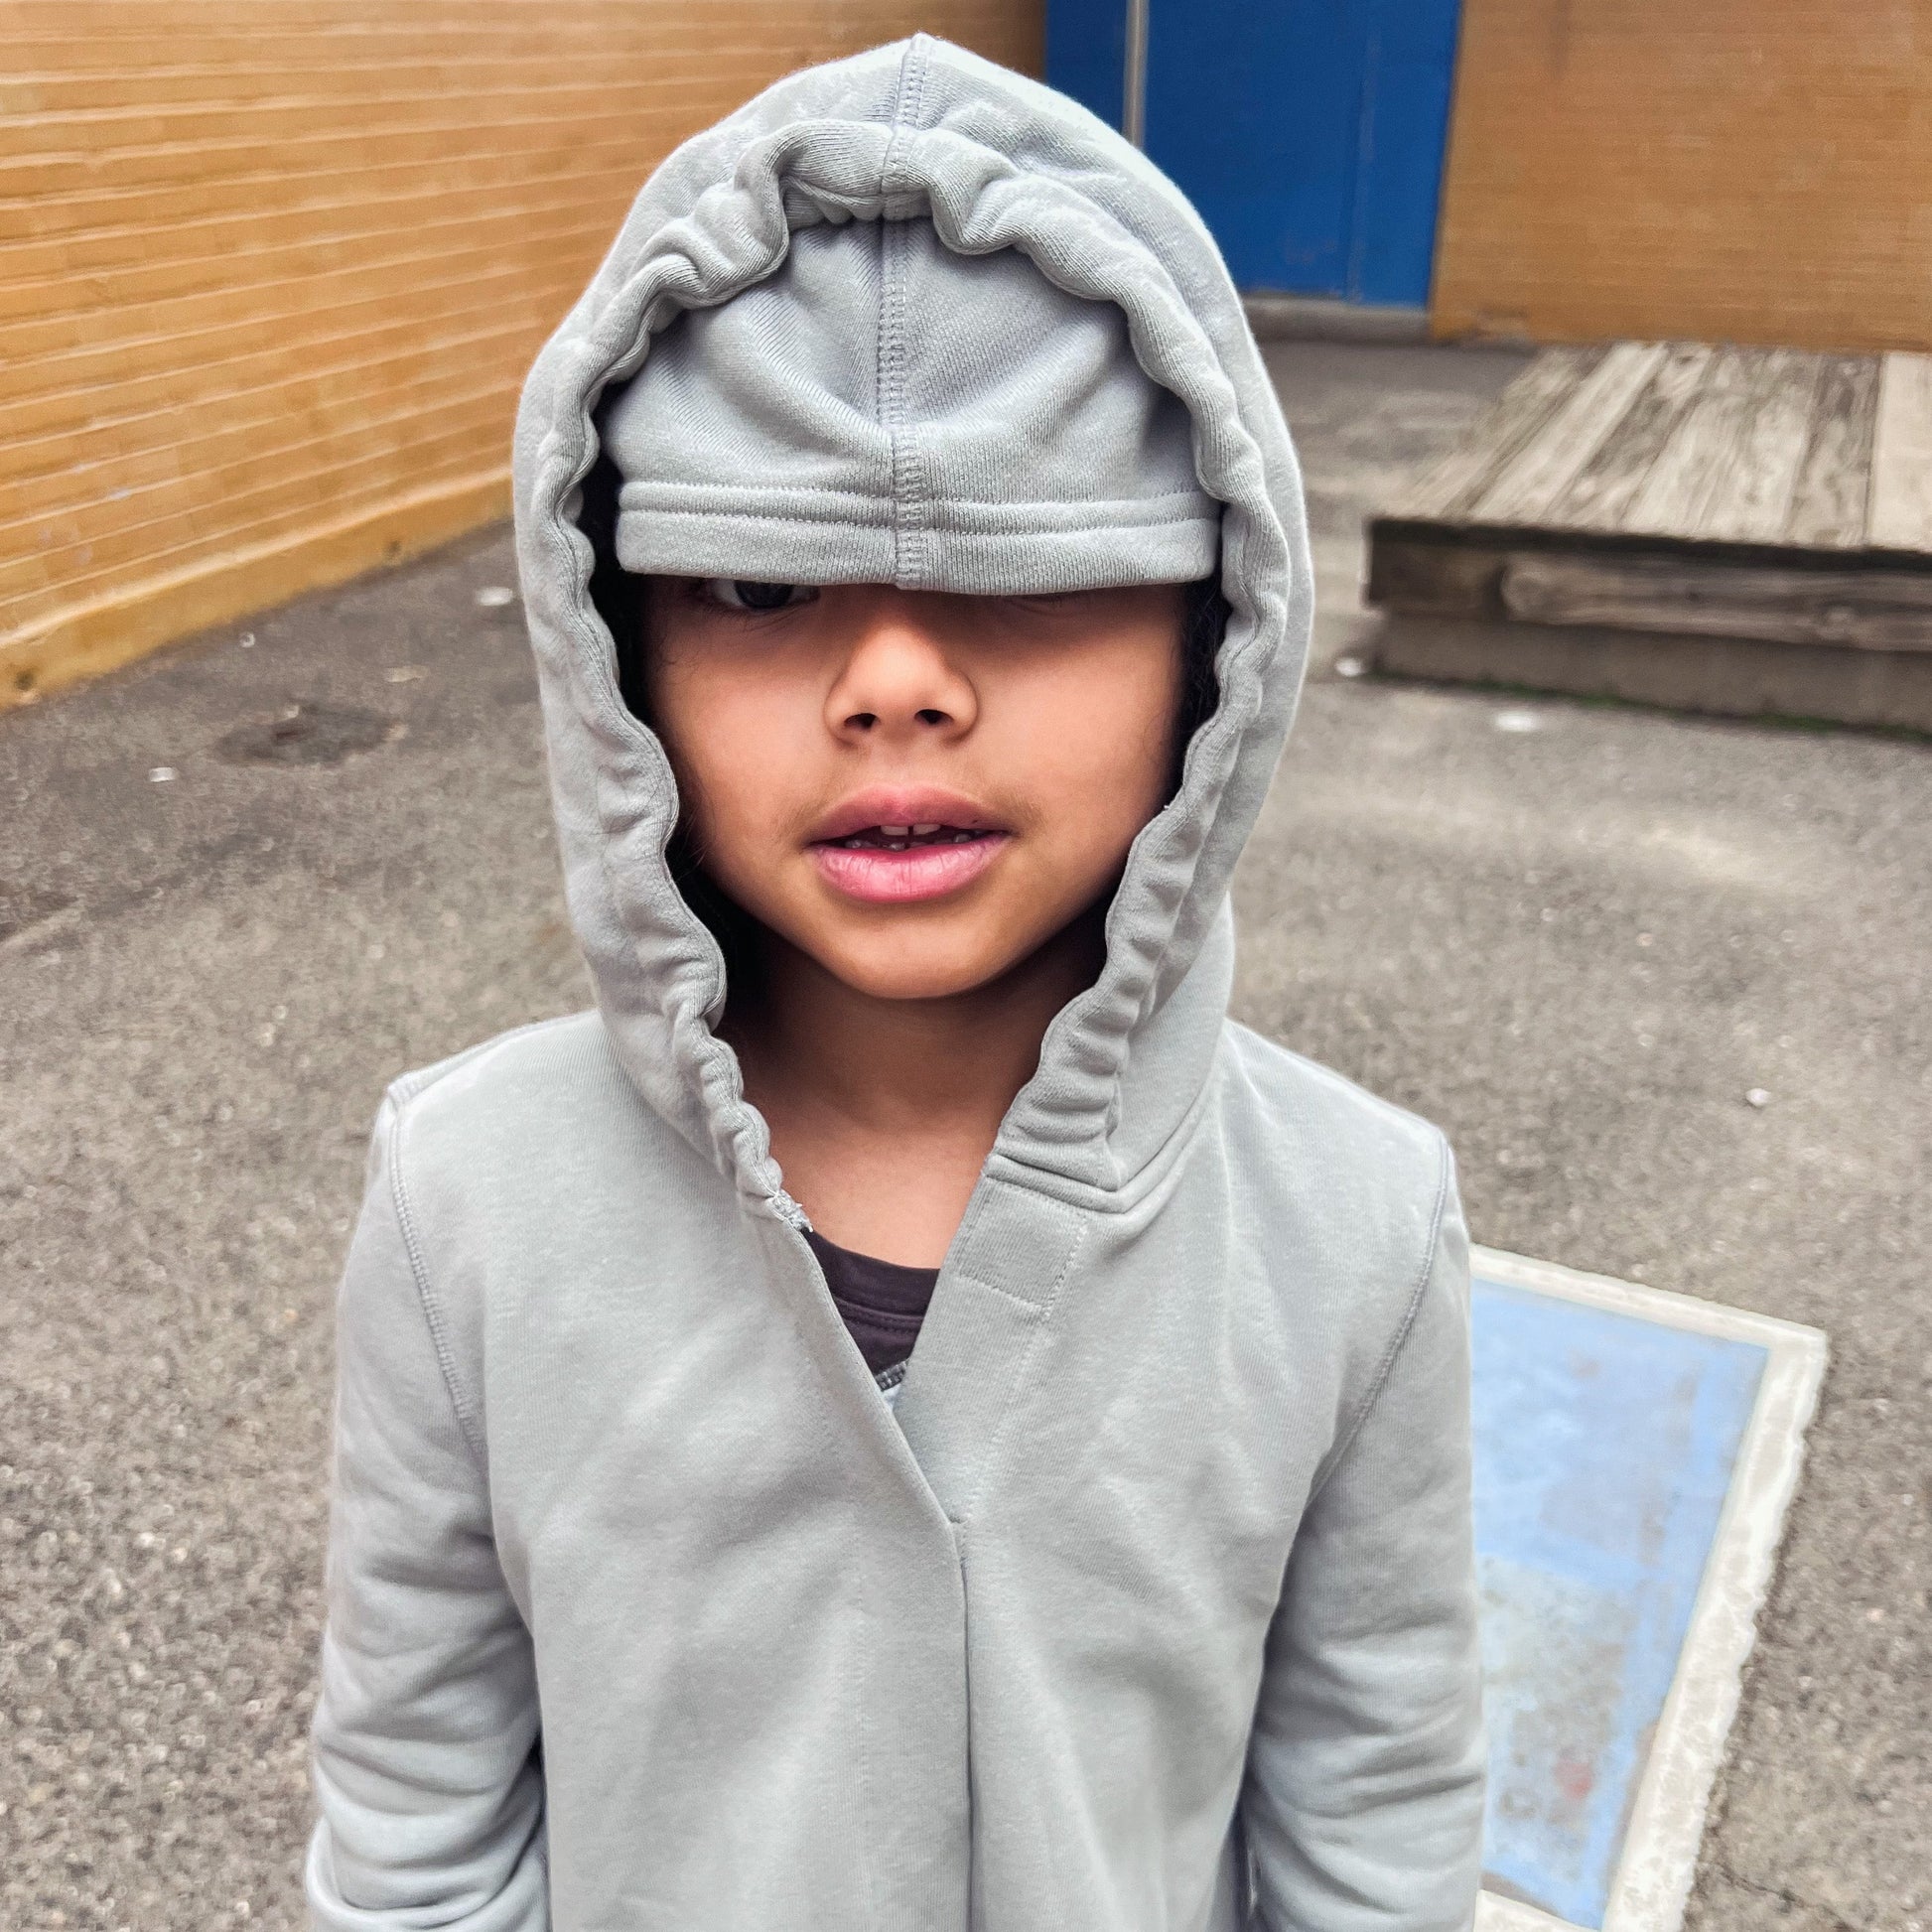 Sensory break hoodie. Autistic boy wearing sound reducing hood and eye mask down for a sensory break.